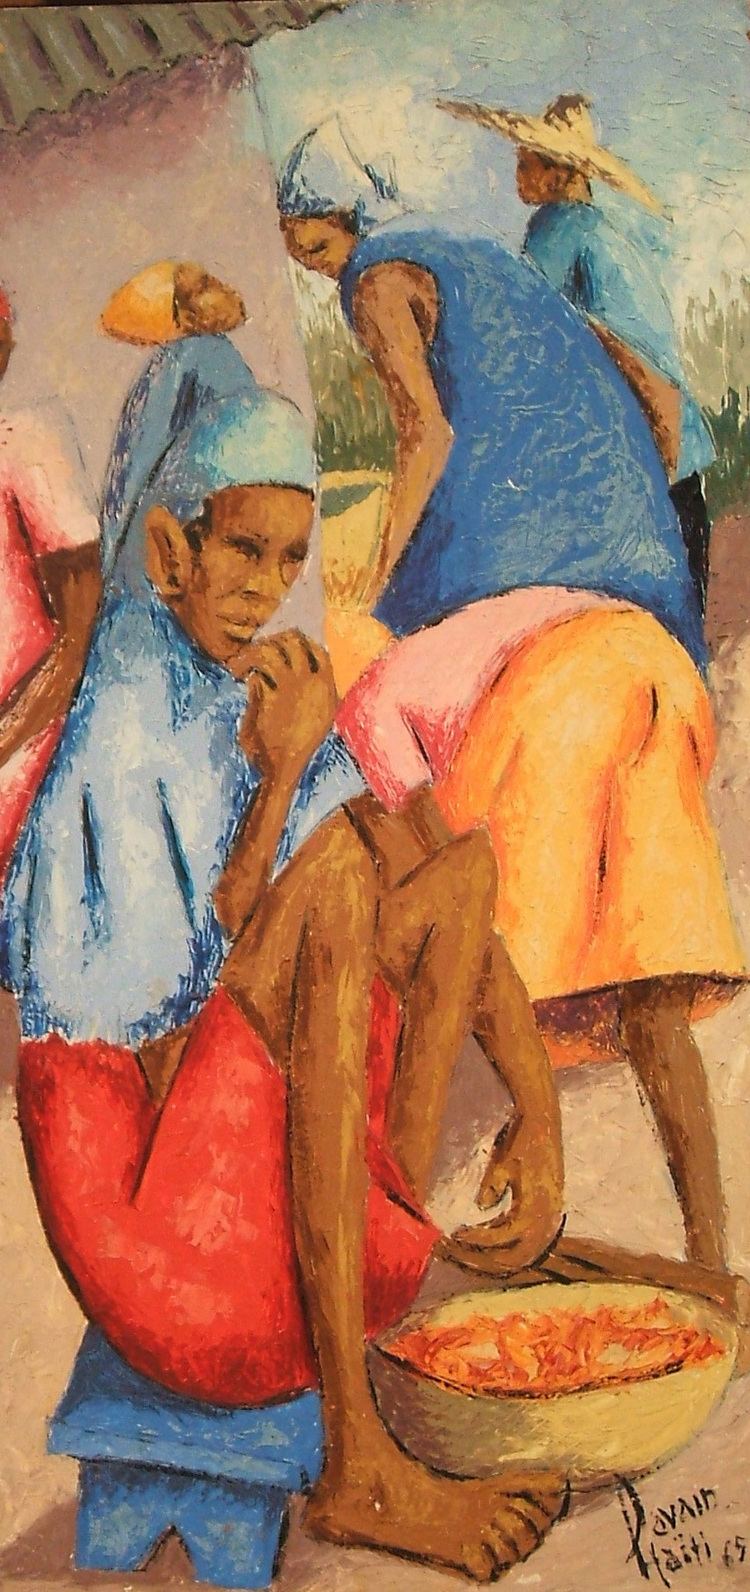 Petion Savain Painting by Haitian artist Petion Savain